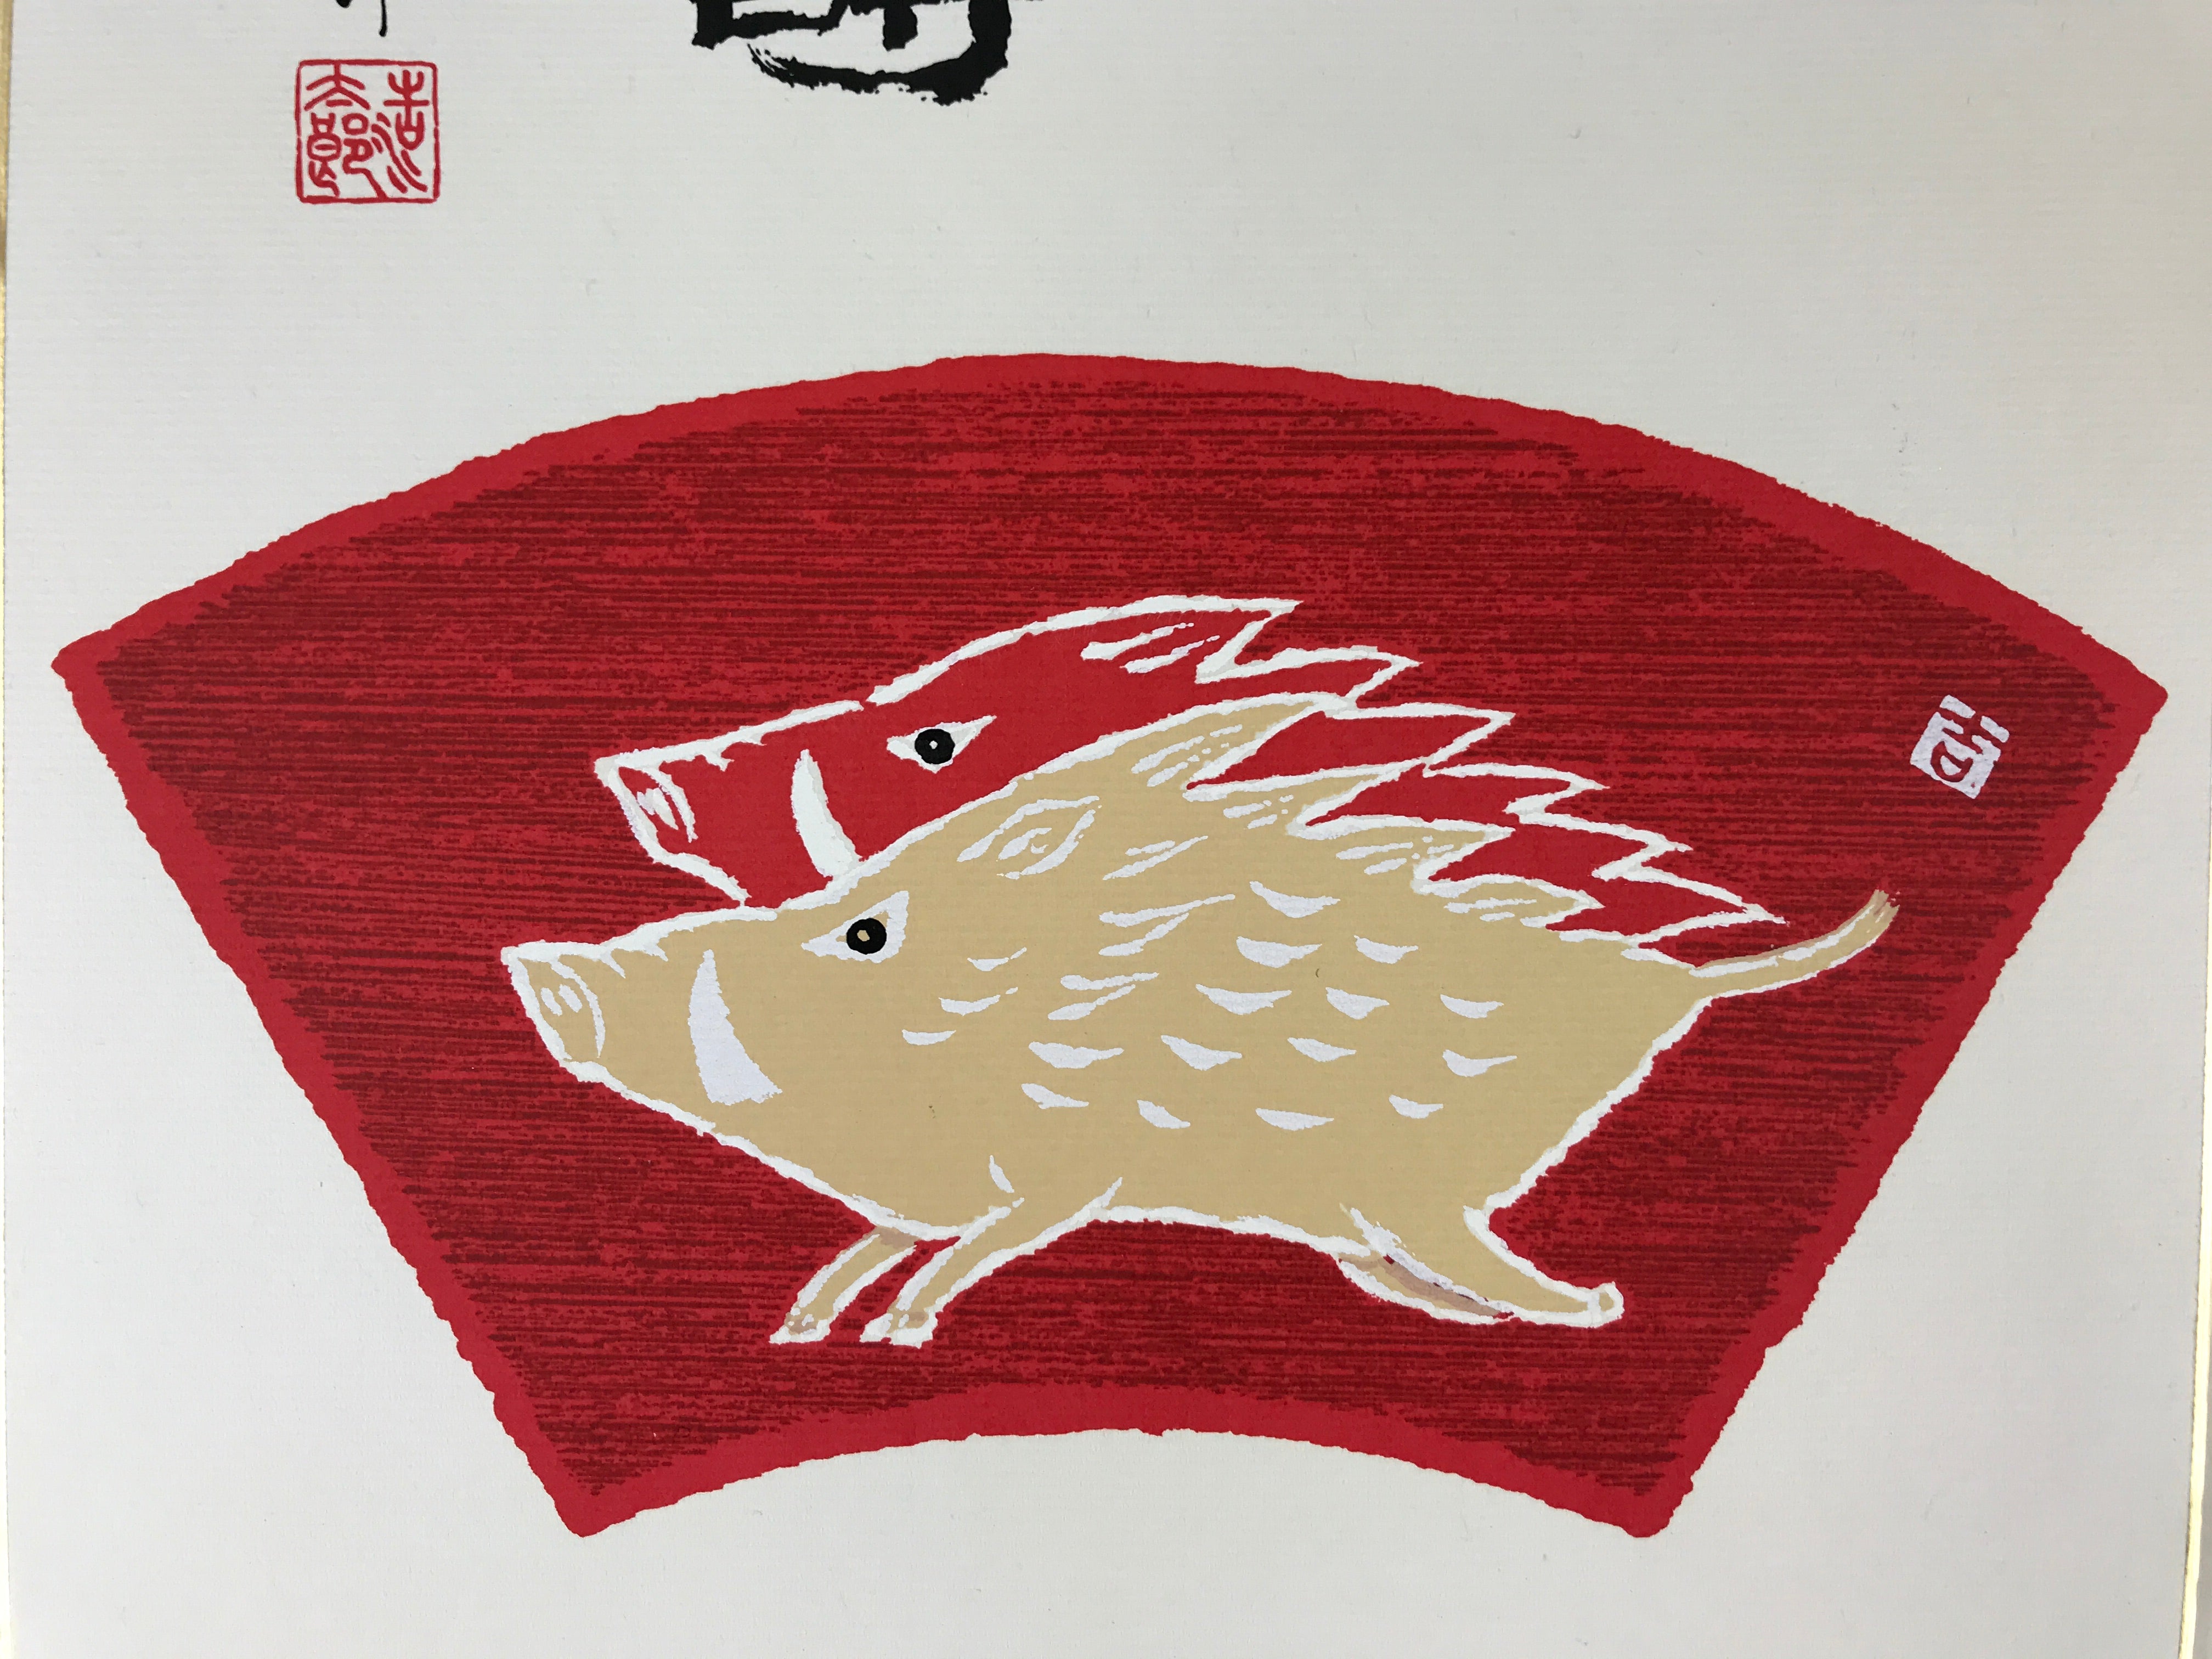 Japanese Art Board Print Shikishi Paper Zodiac Symbol Pig Boar Signed A470